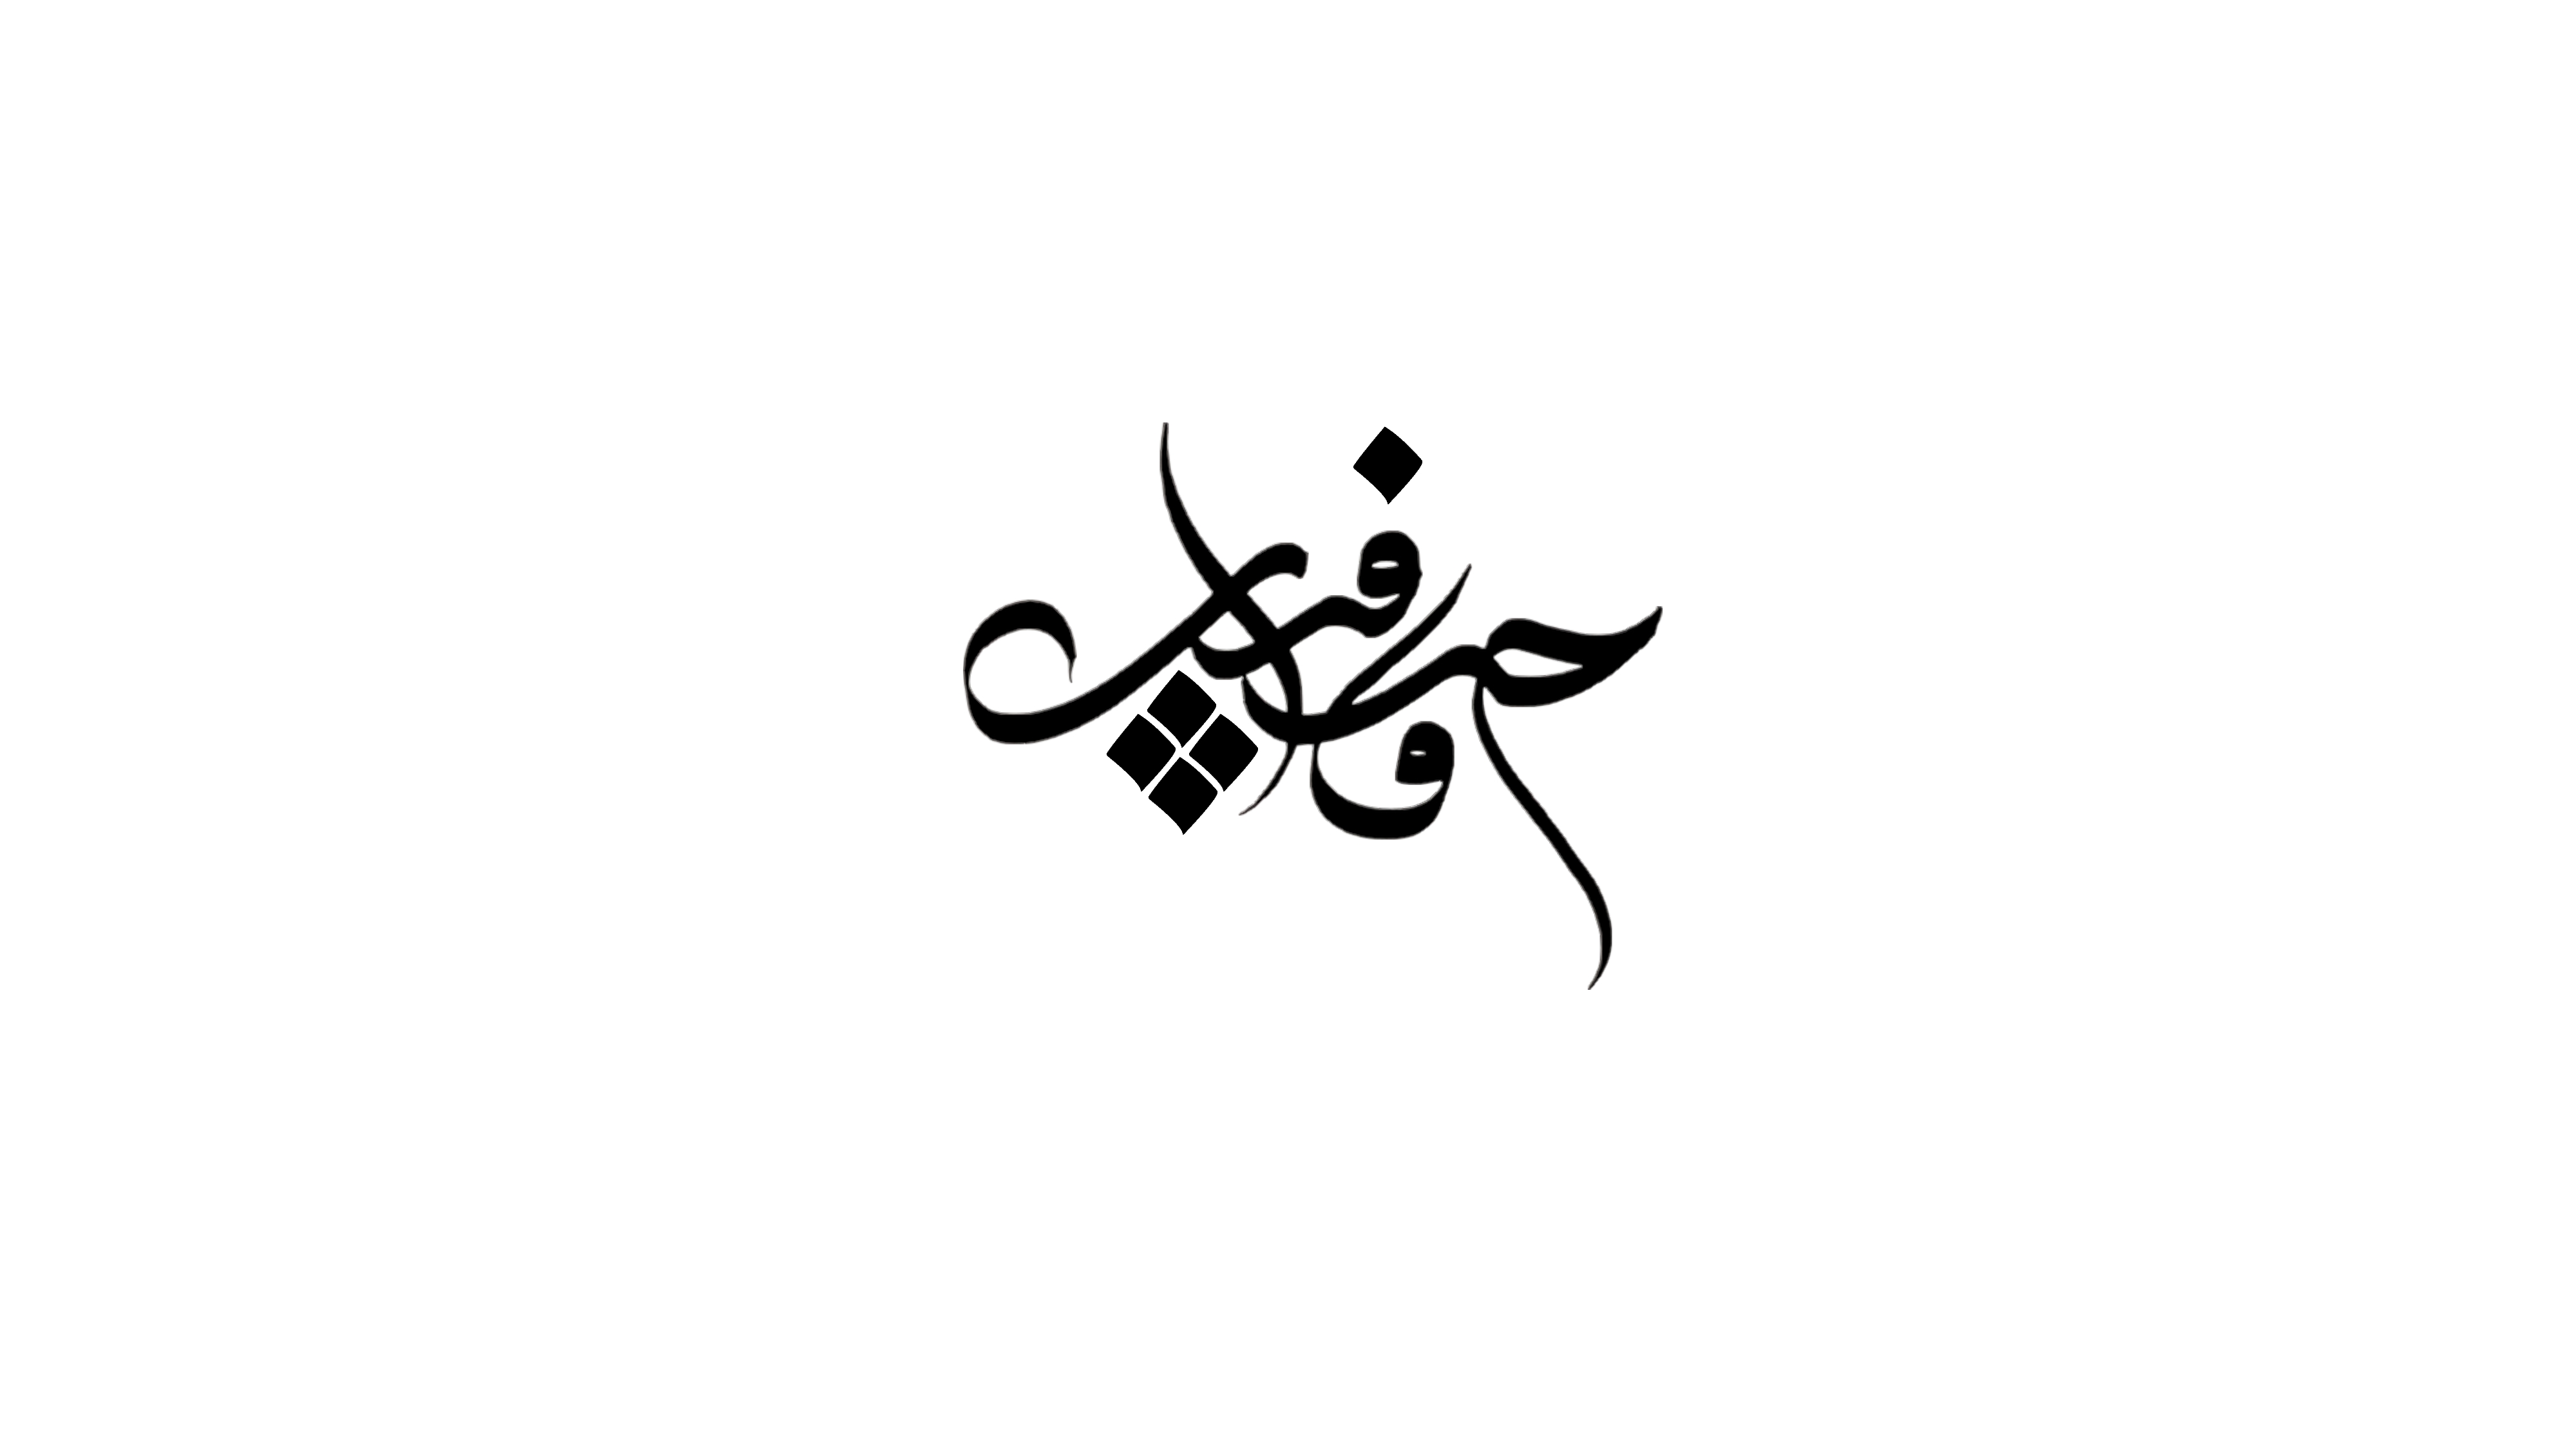 Calligraphie “Style” par Shaker Kashgari